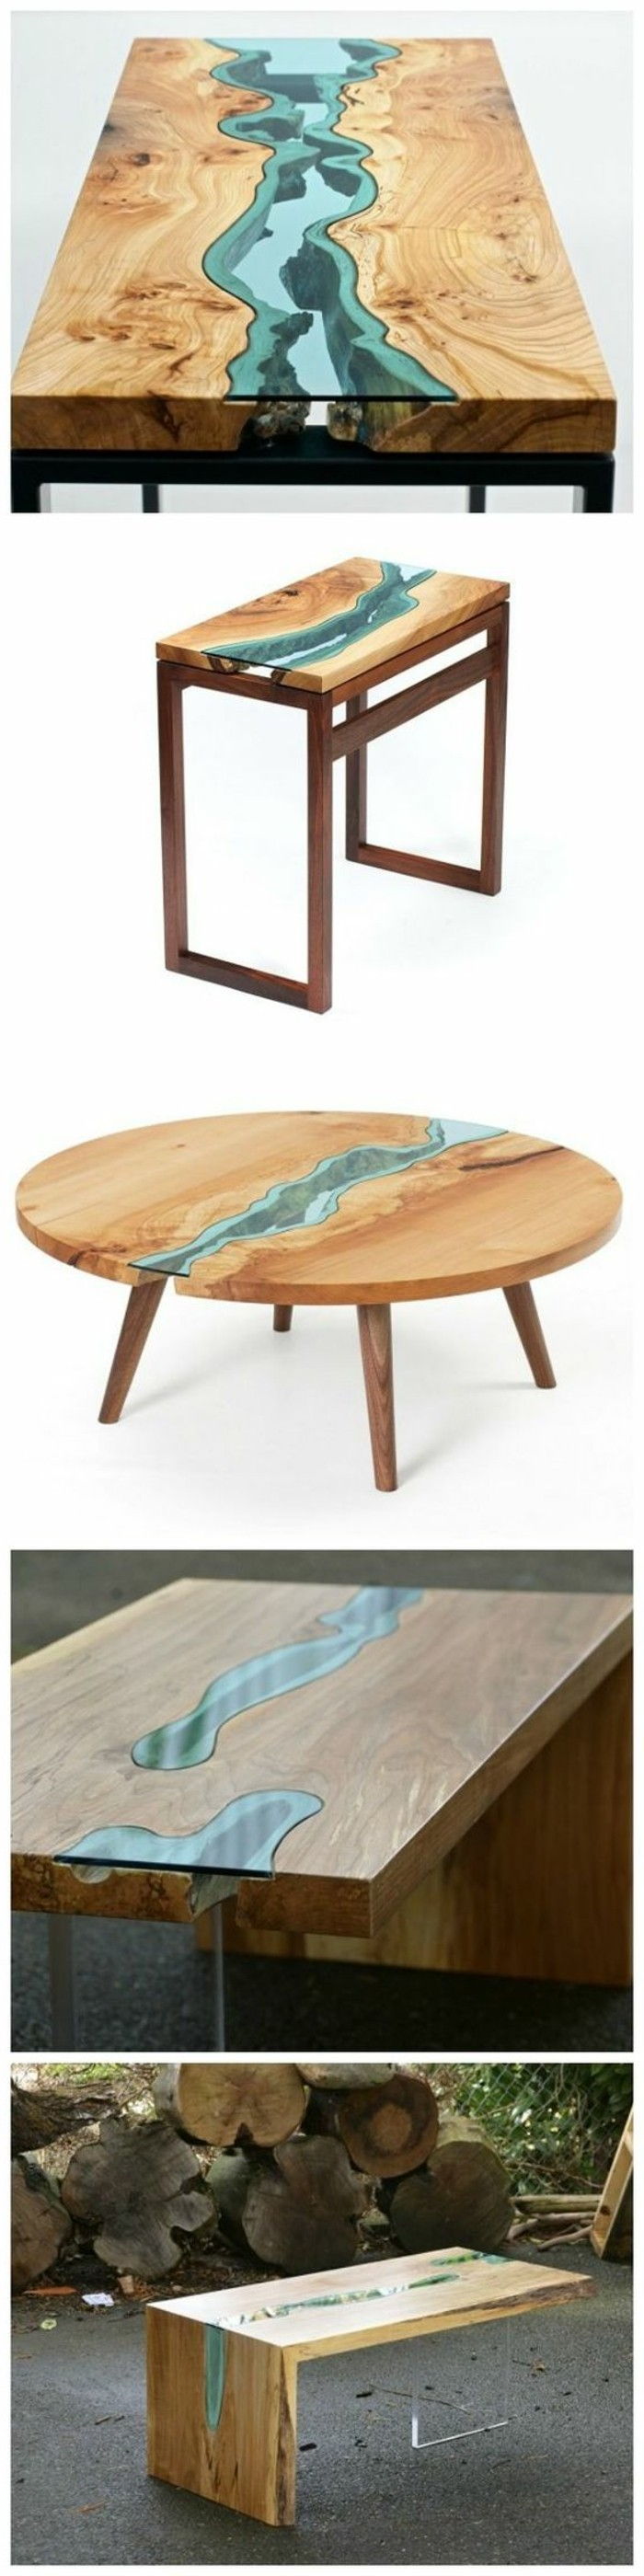 DIY-Moebel-creative-wohnideen-table-of-drewniano-szklana-own-build